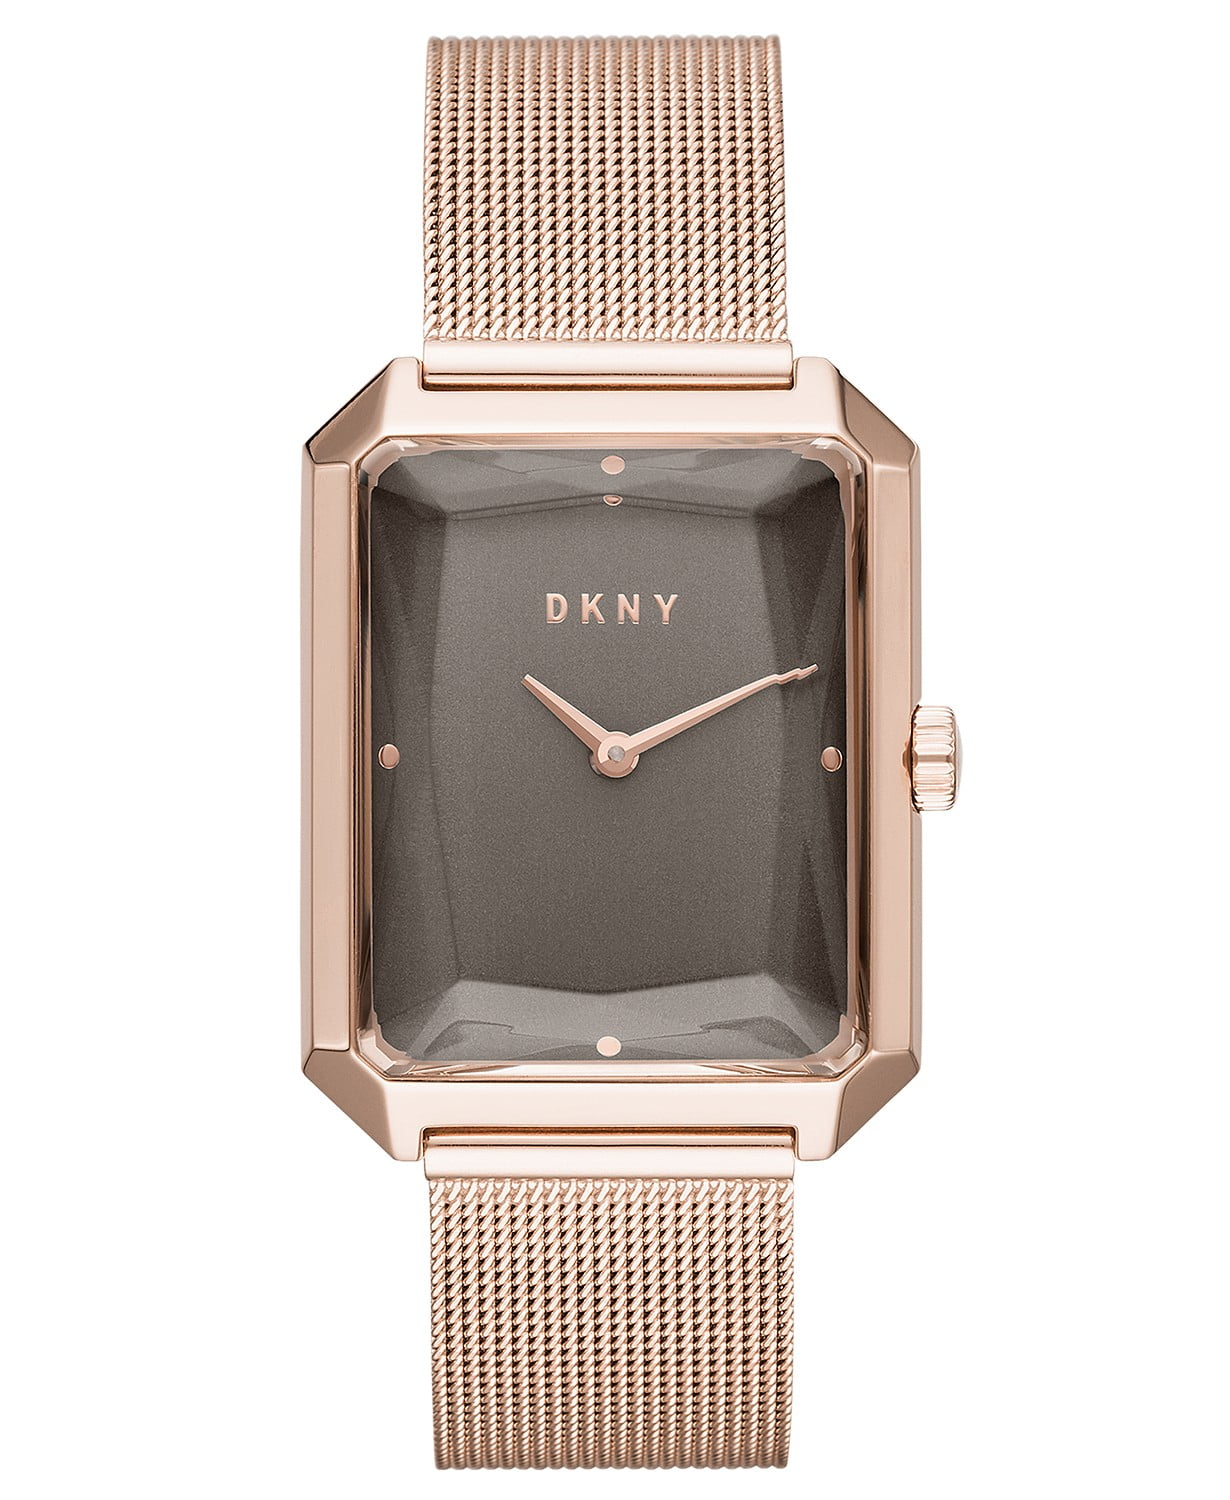 24 DKNY - Donna Karan NY Watches • Official Retailer • Watchard.com